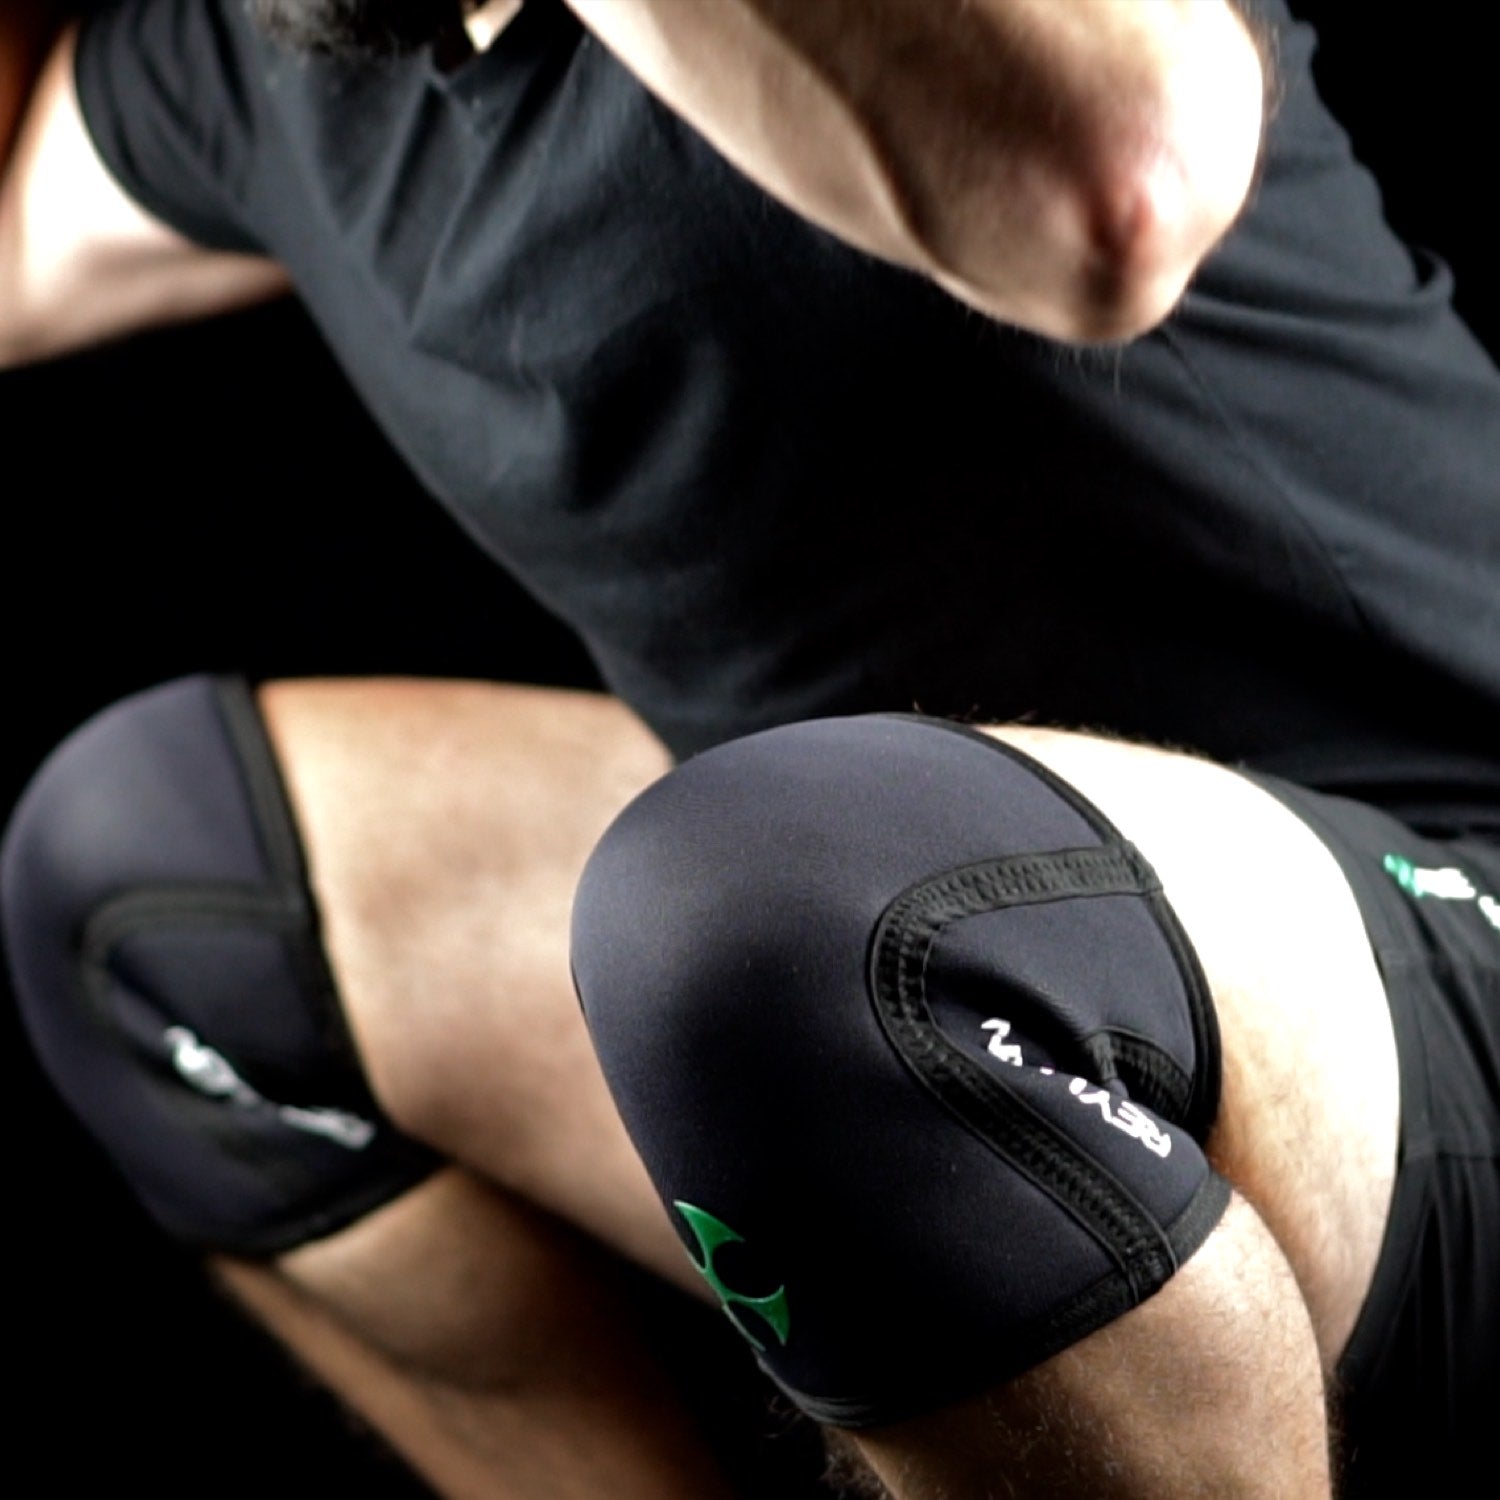 Venta X3 Knee Sleeves Neoprene Brace Compression Support 7mm - Black - Shown in squat Reyllen